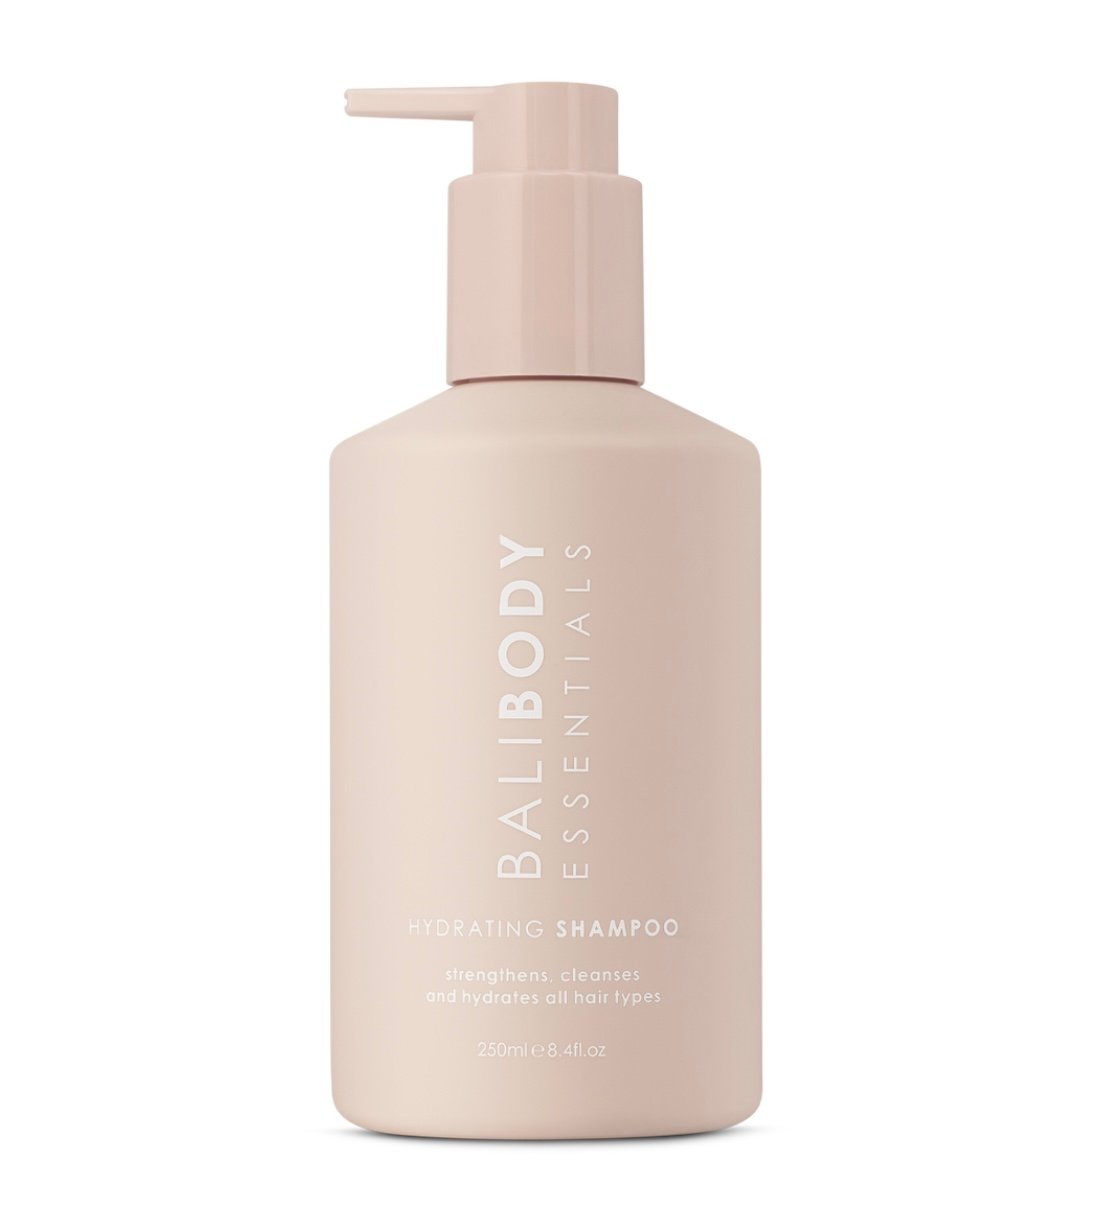 Увлажняющий шампунь для волос Hydrating Shampoo Bali Body, 250мл